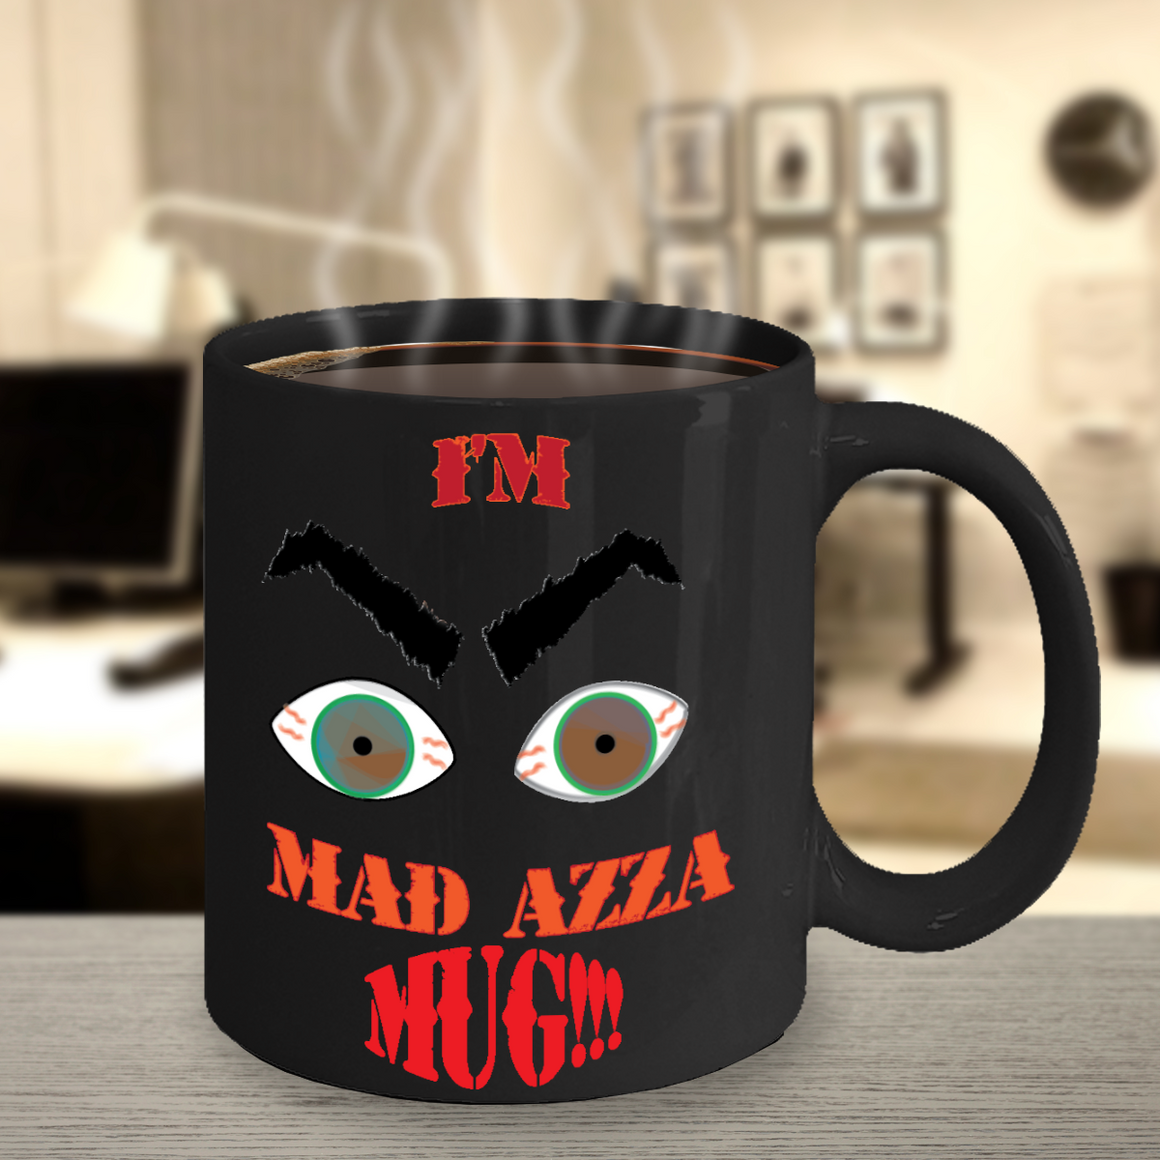 Mug Messages: Mad as a Mug - Capital Elements 2 Wellness and Fitness